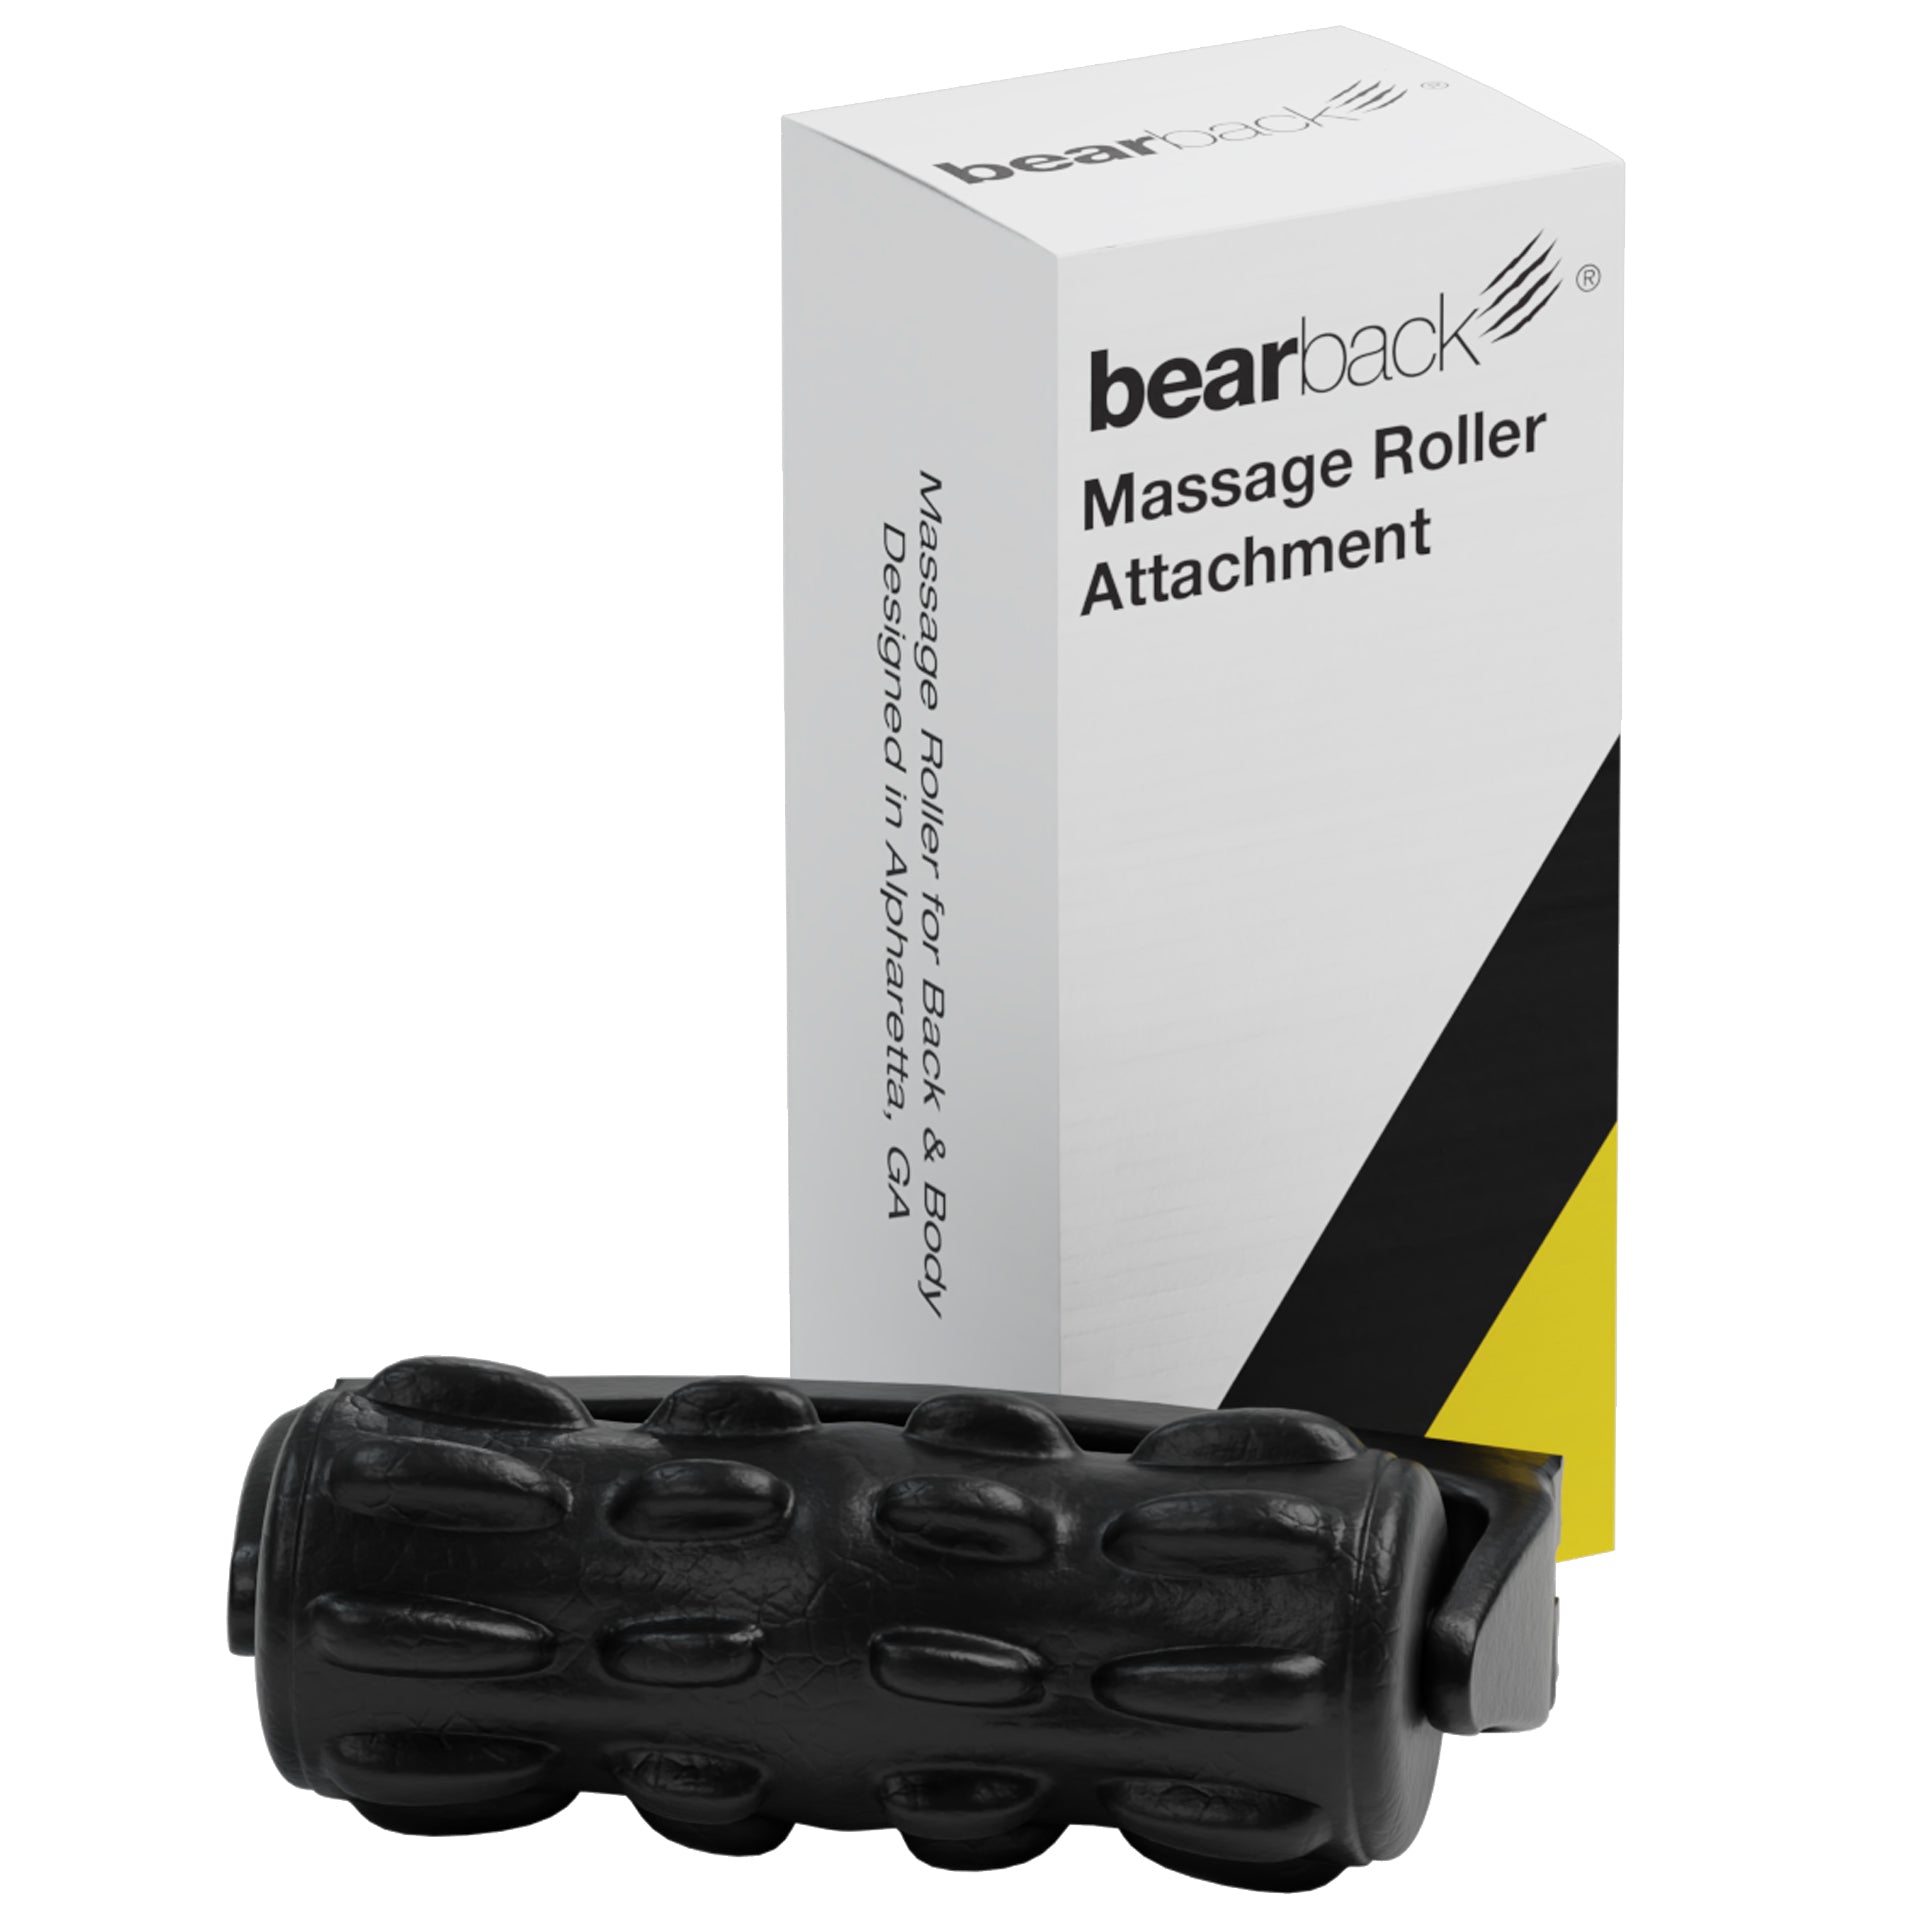 Bearback Massage Roller Attachment